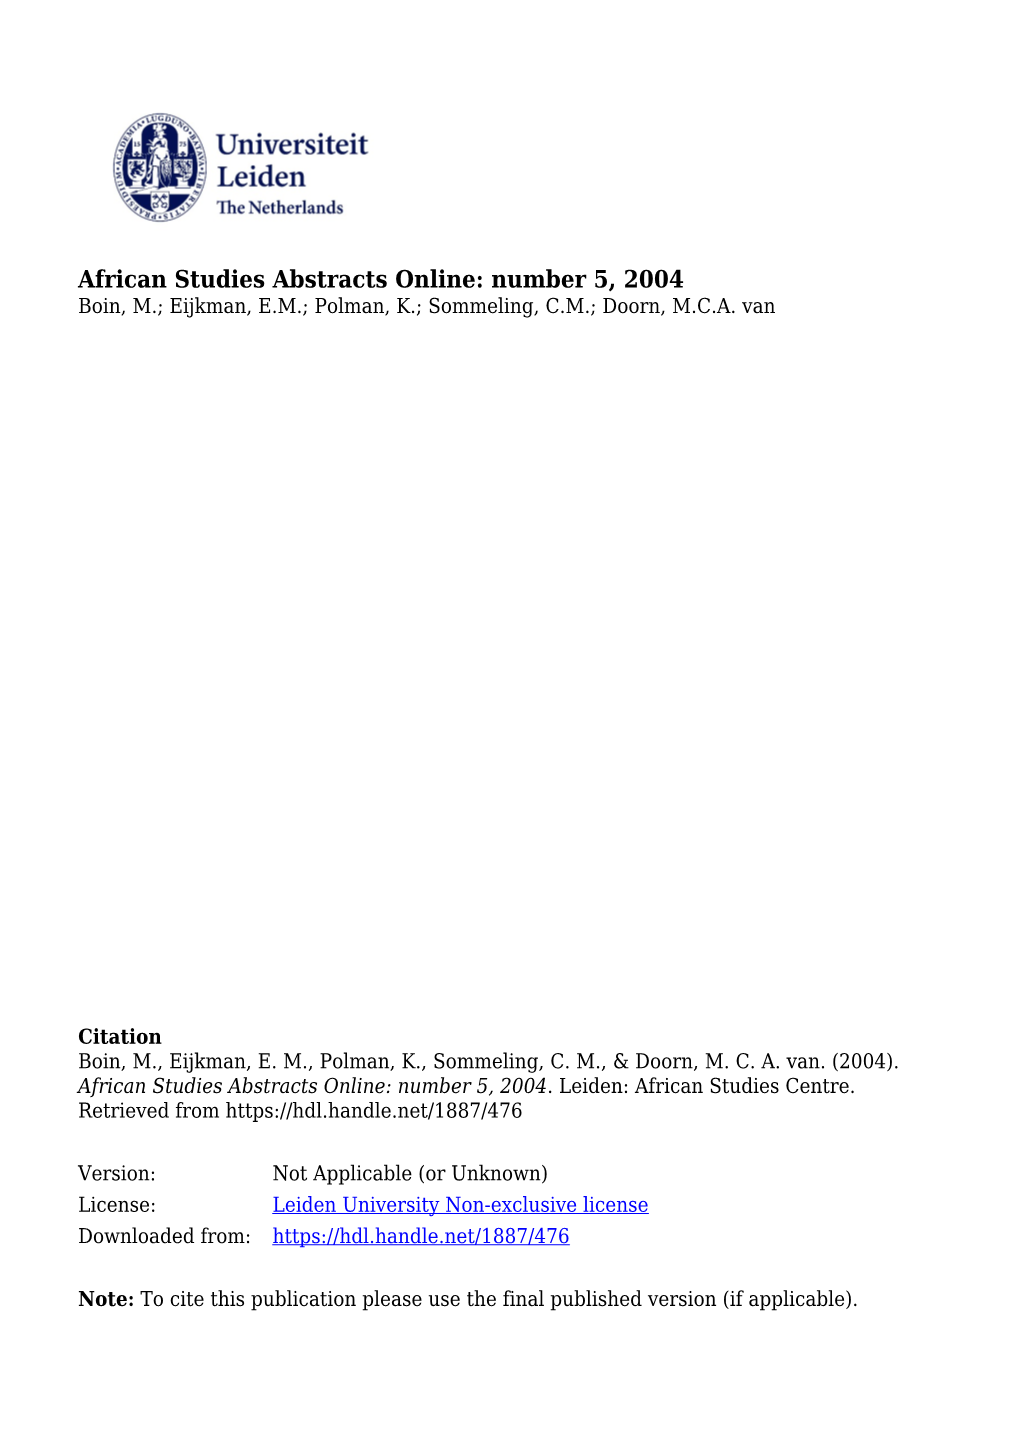 African Studies Abstracts Online: Number 5, 2004 Boin, M.; Eijkman, E.M.; Polman, K.; Sommeling, C.M.; Doorn, M.C.A